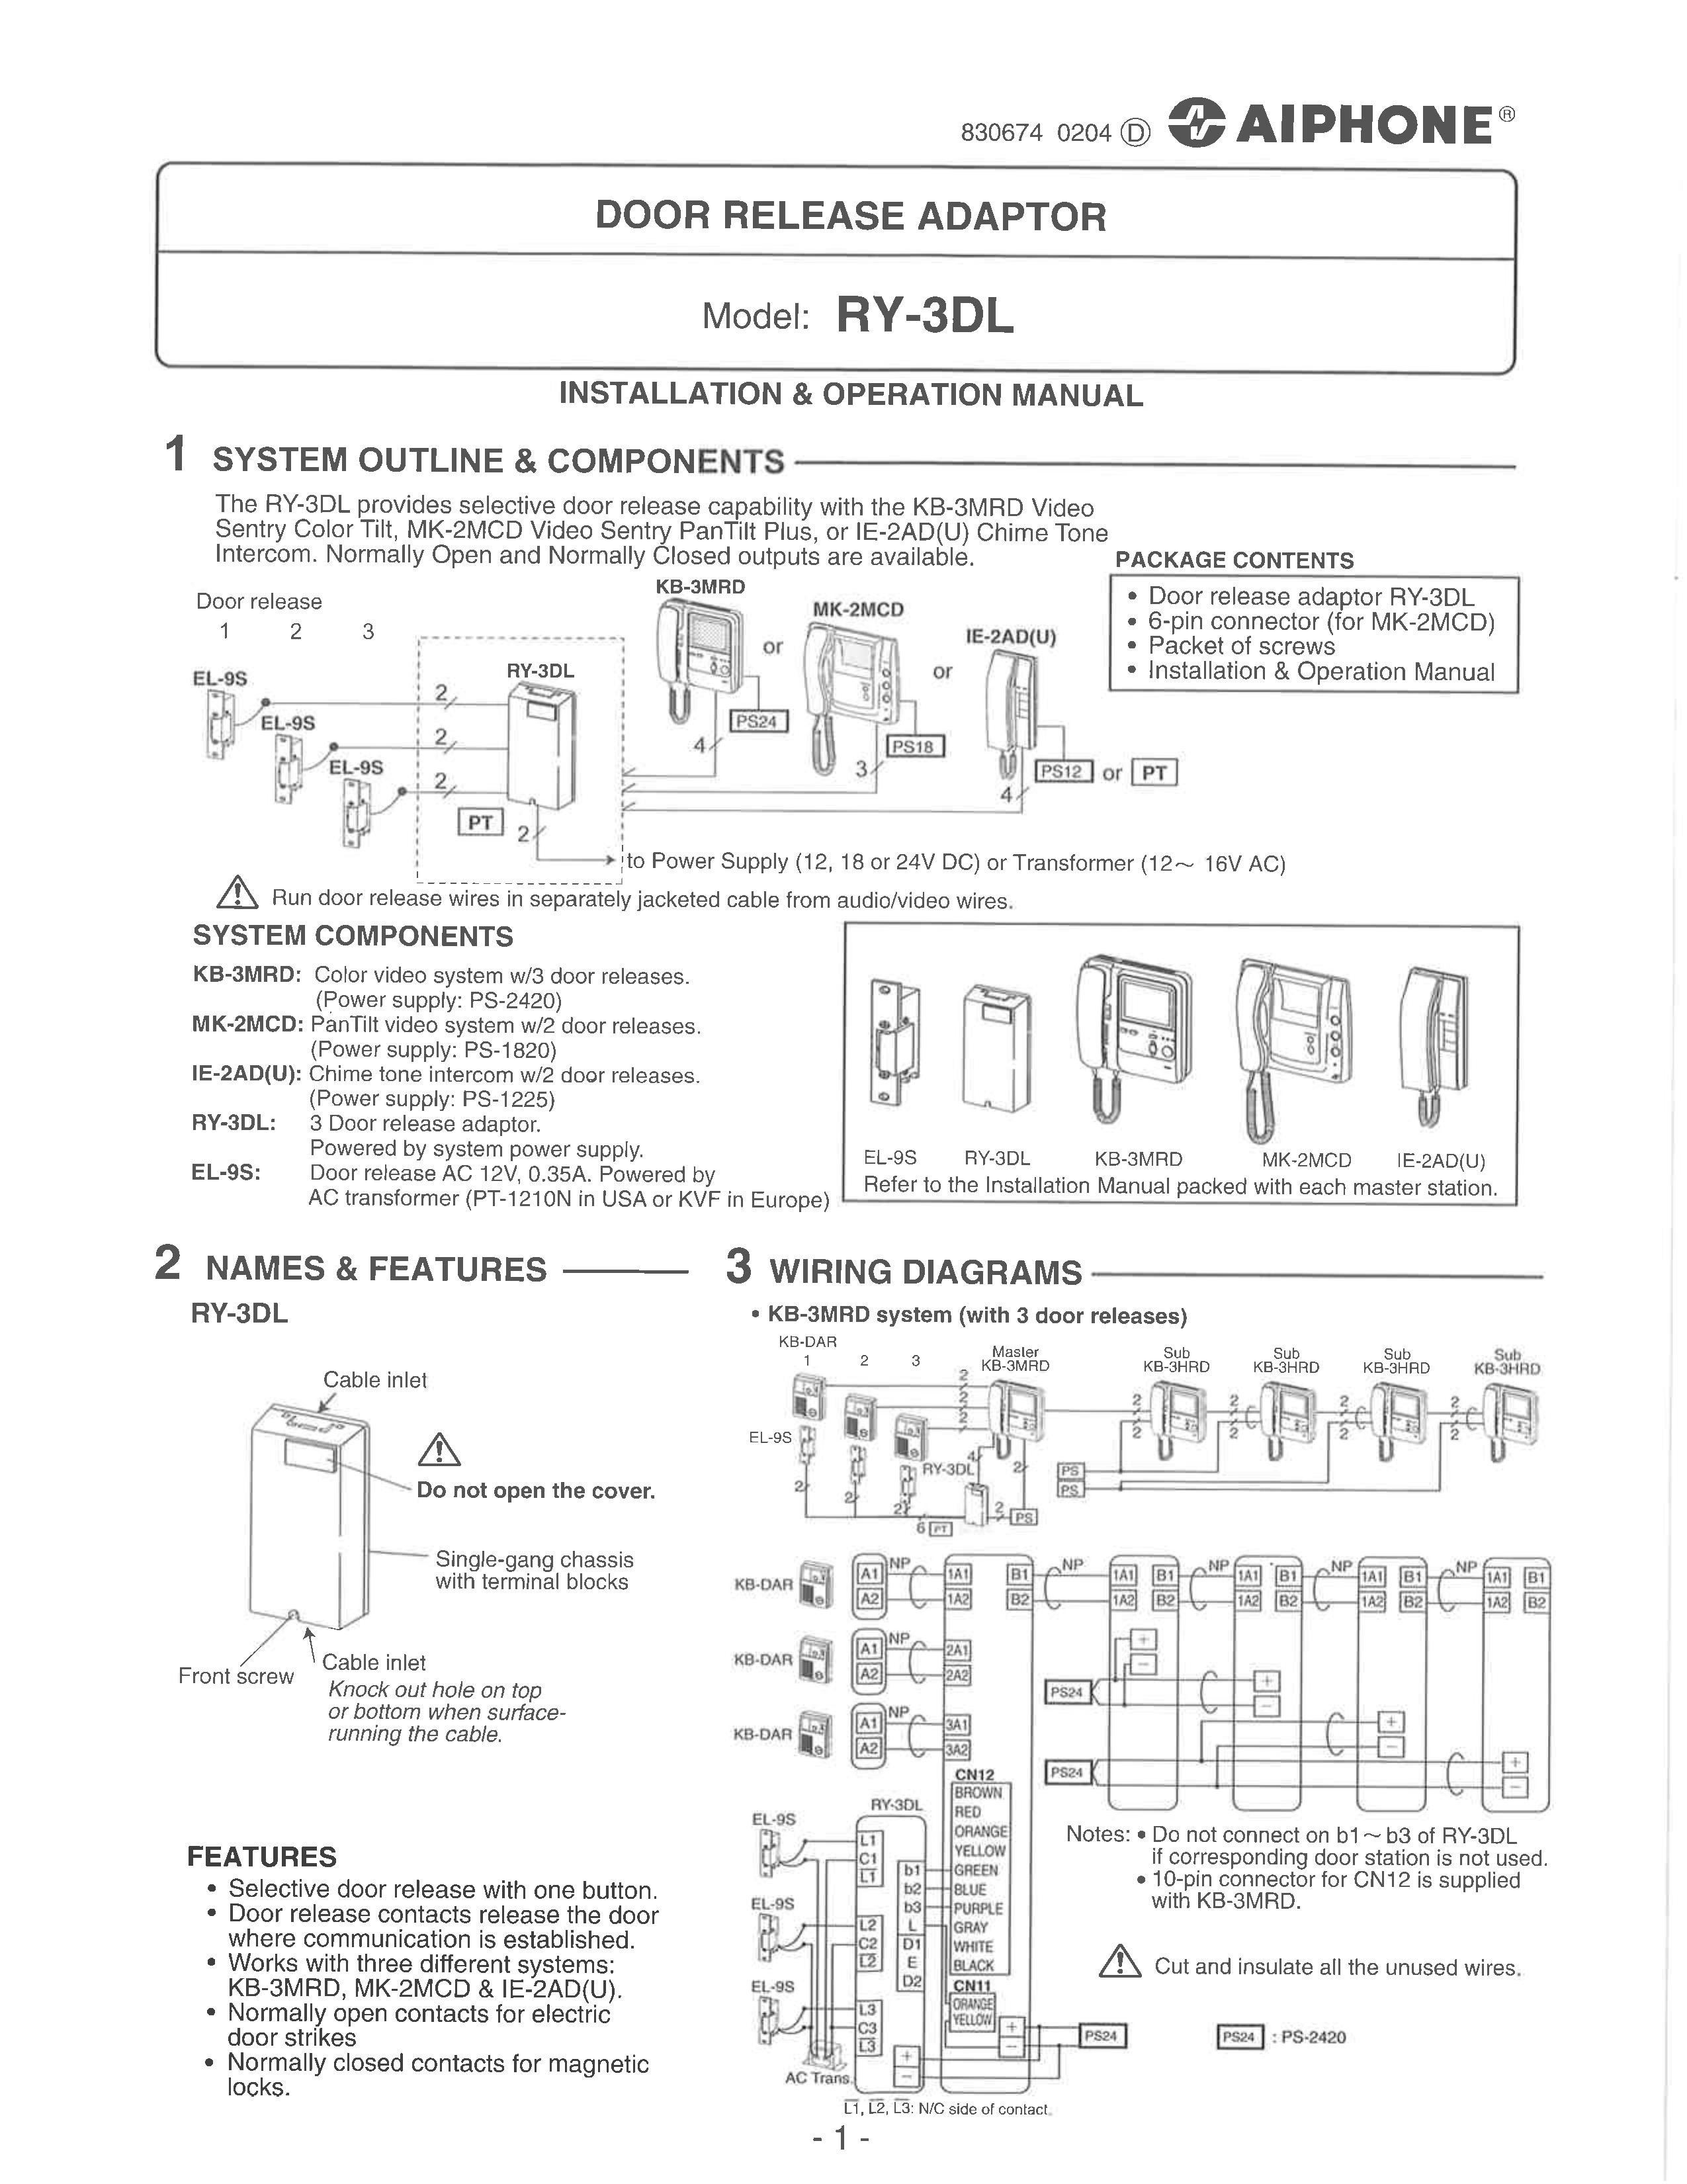 Aiphone RY-3DL Backyard Playset User Manual